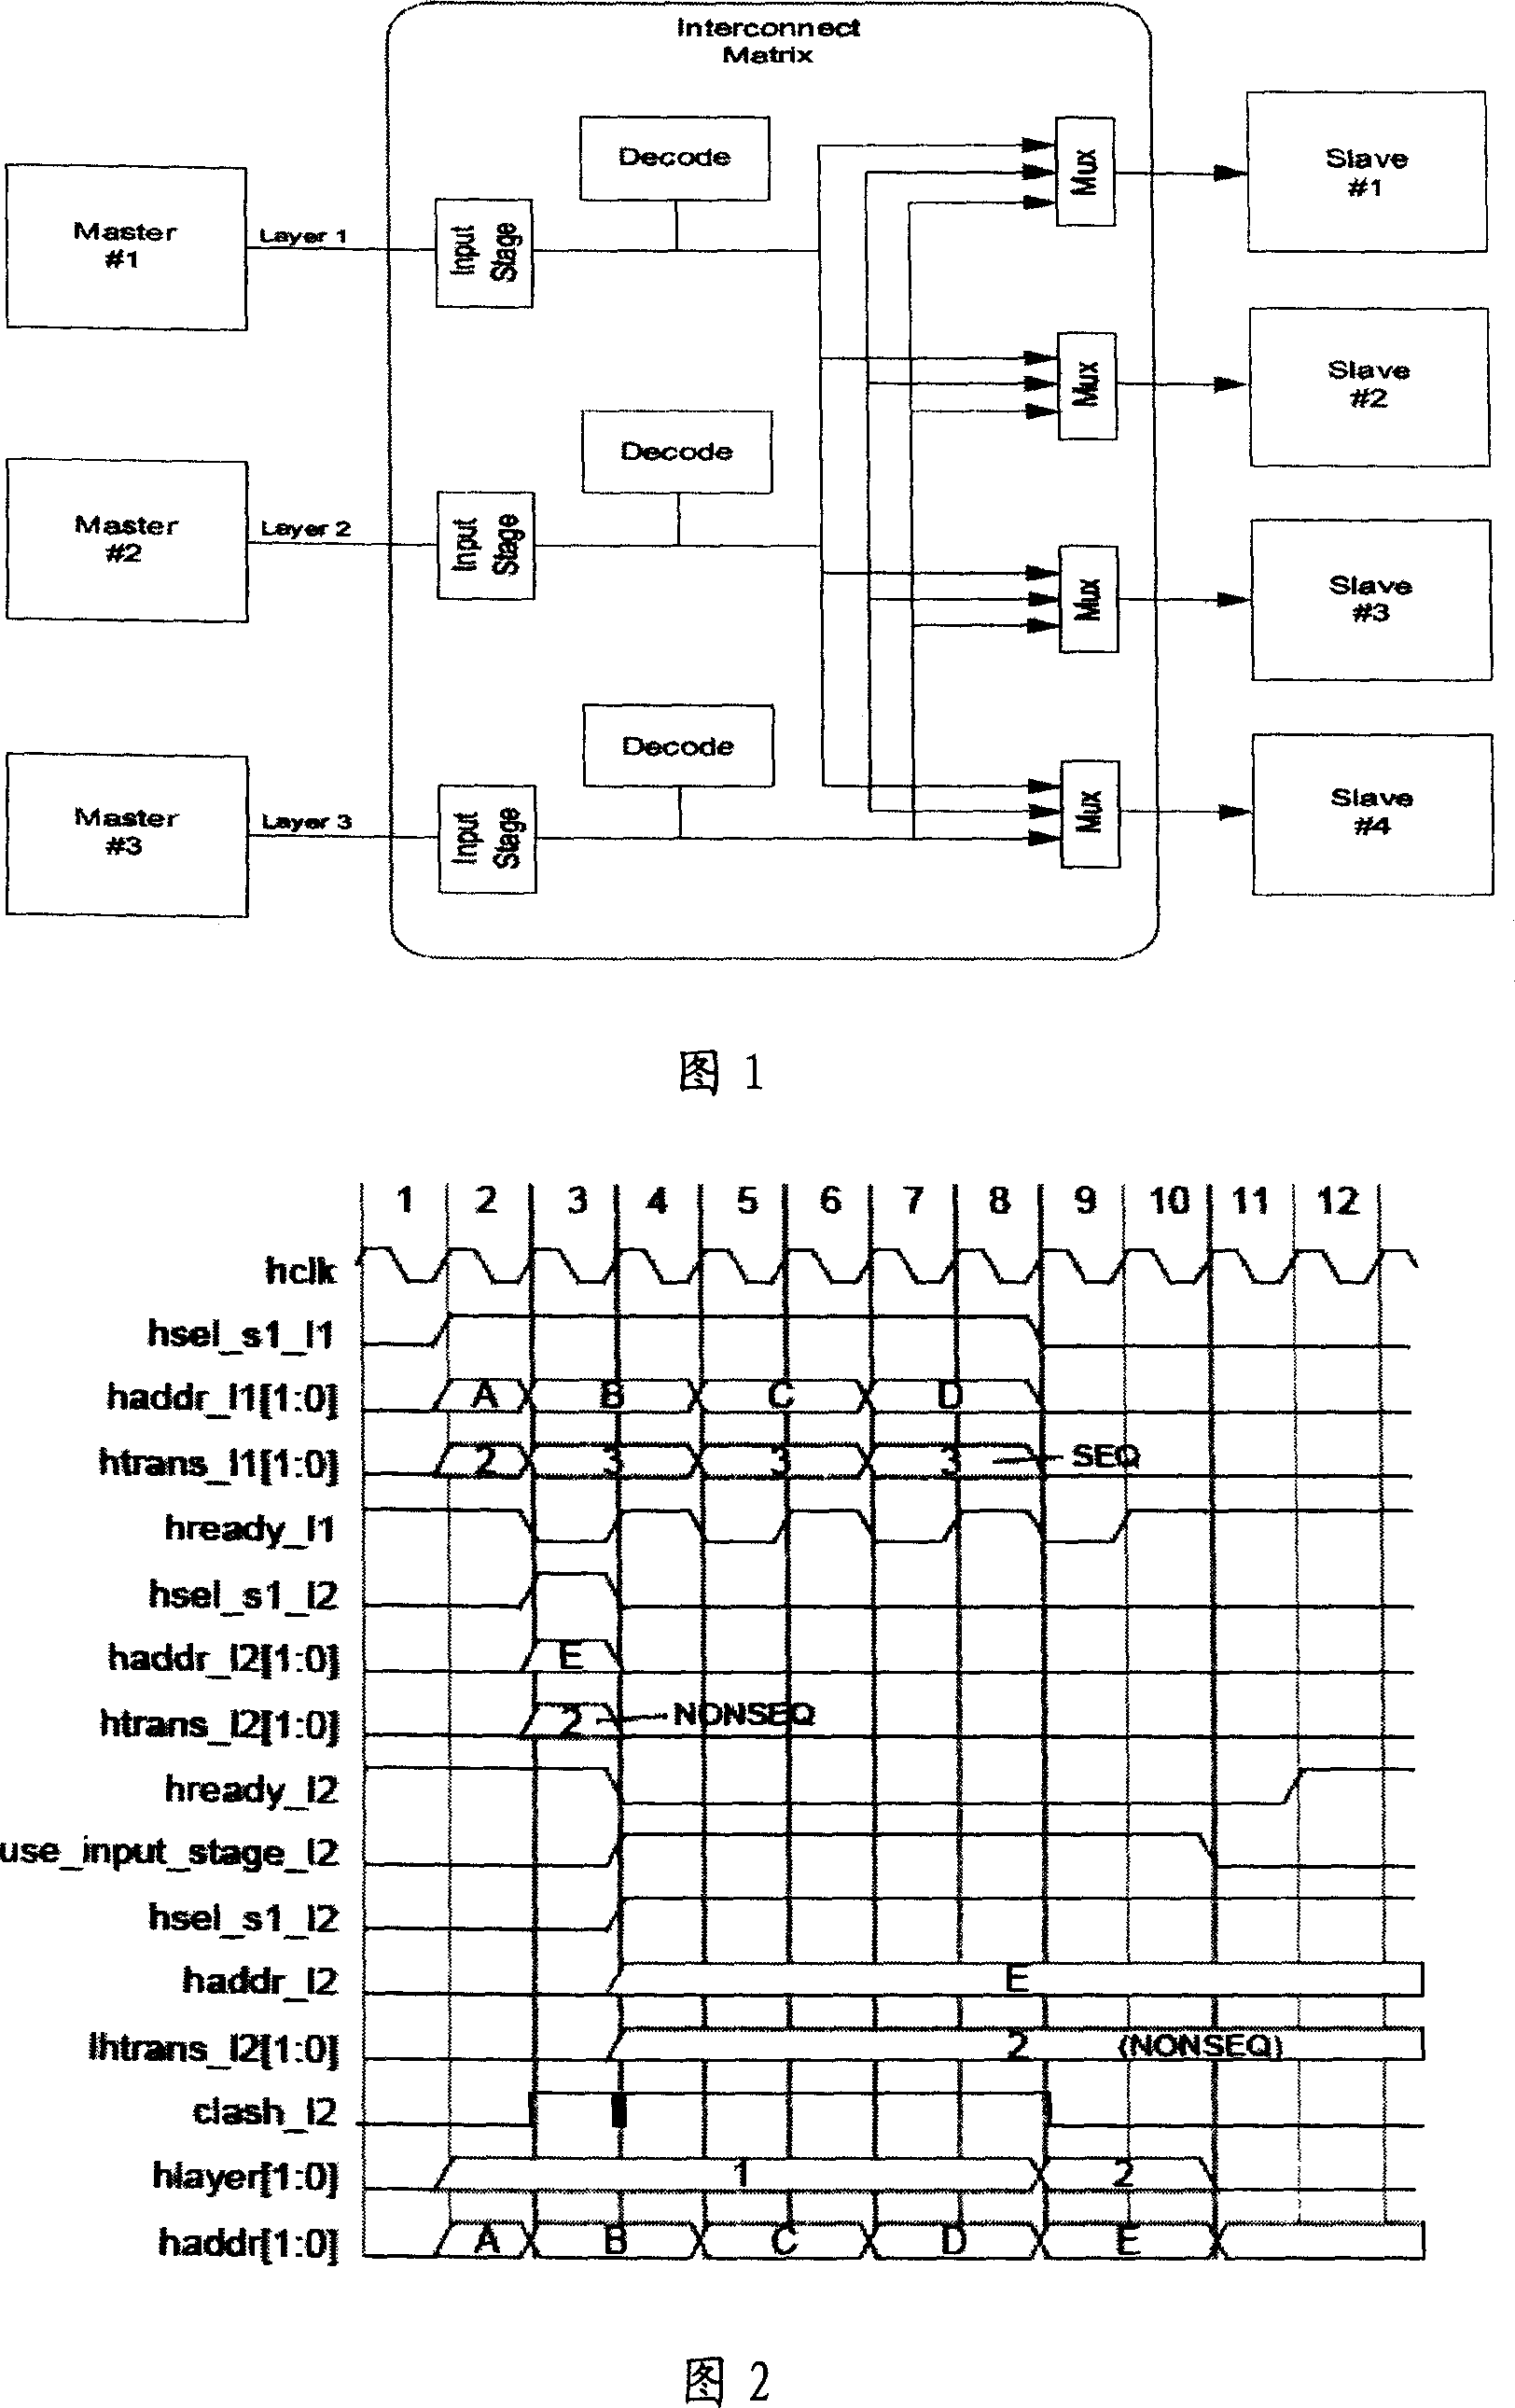 Asynchrous AHB interconnection matrix interface device